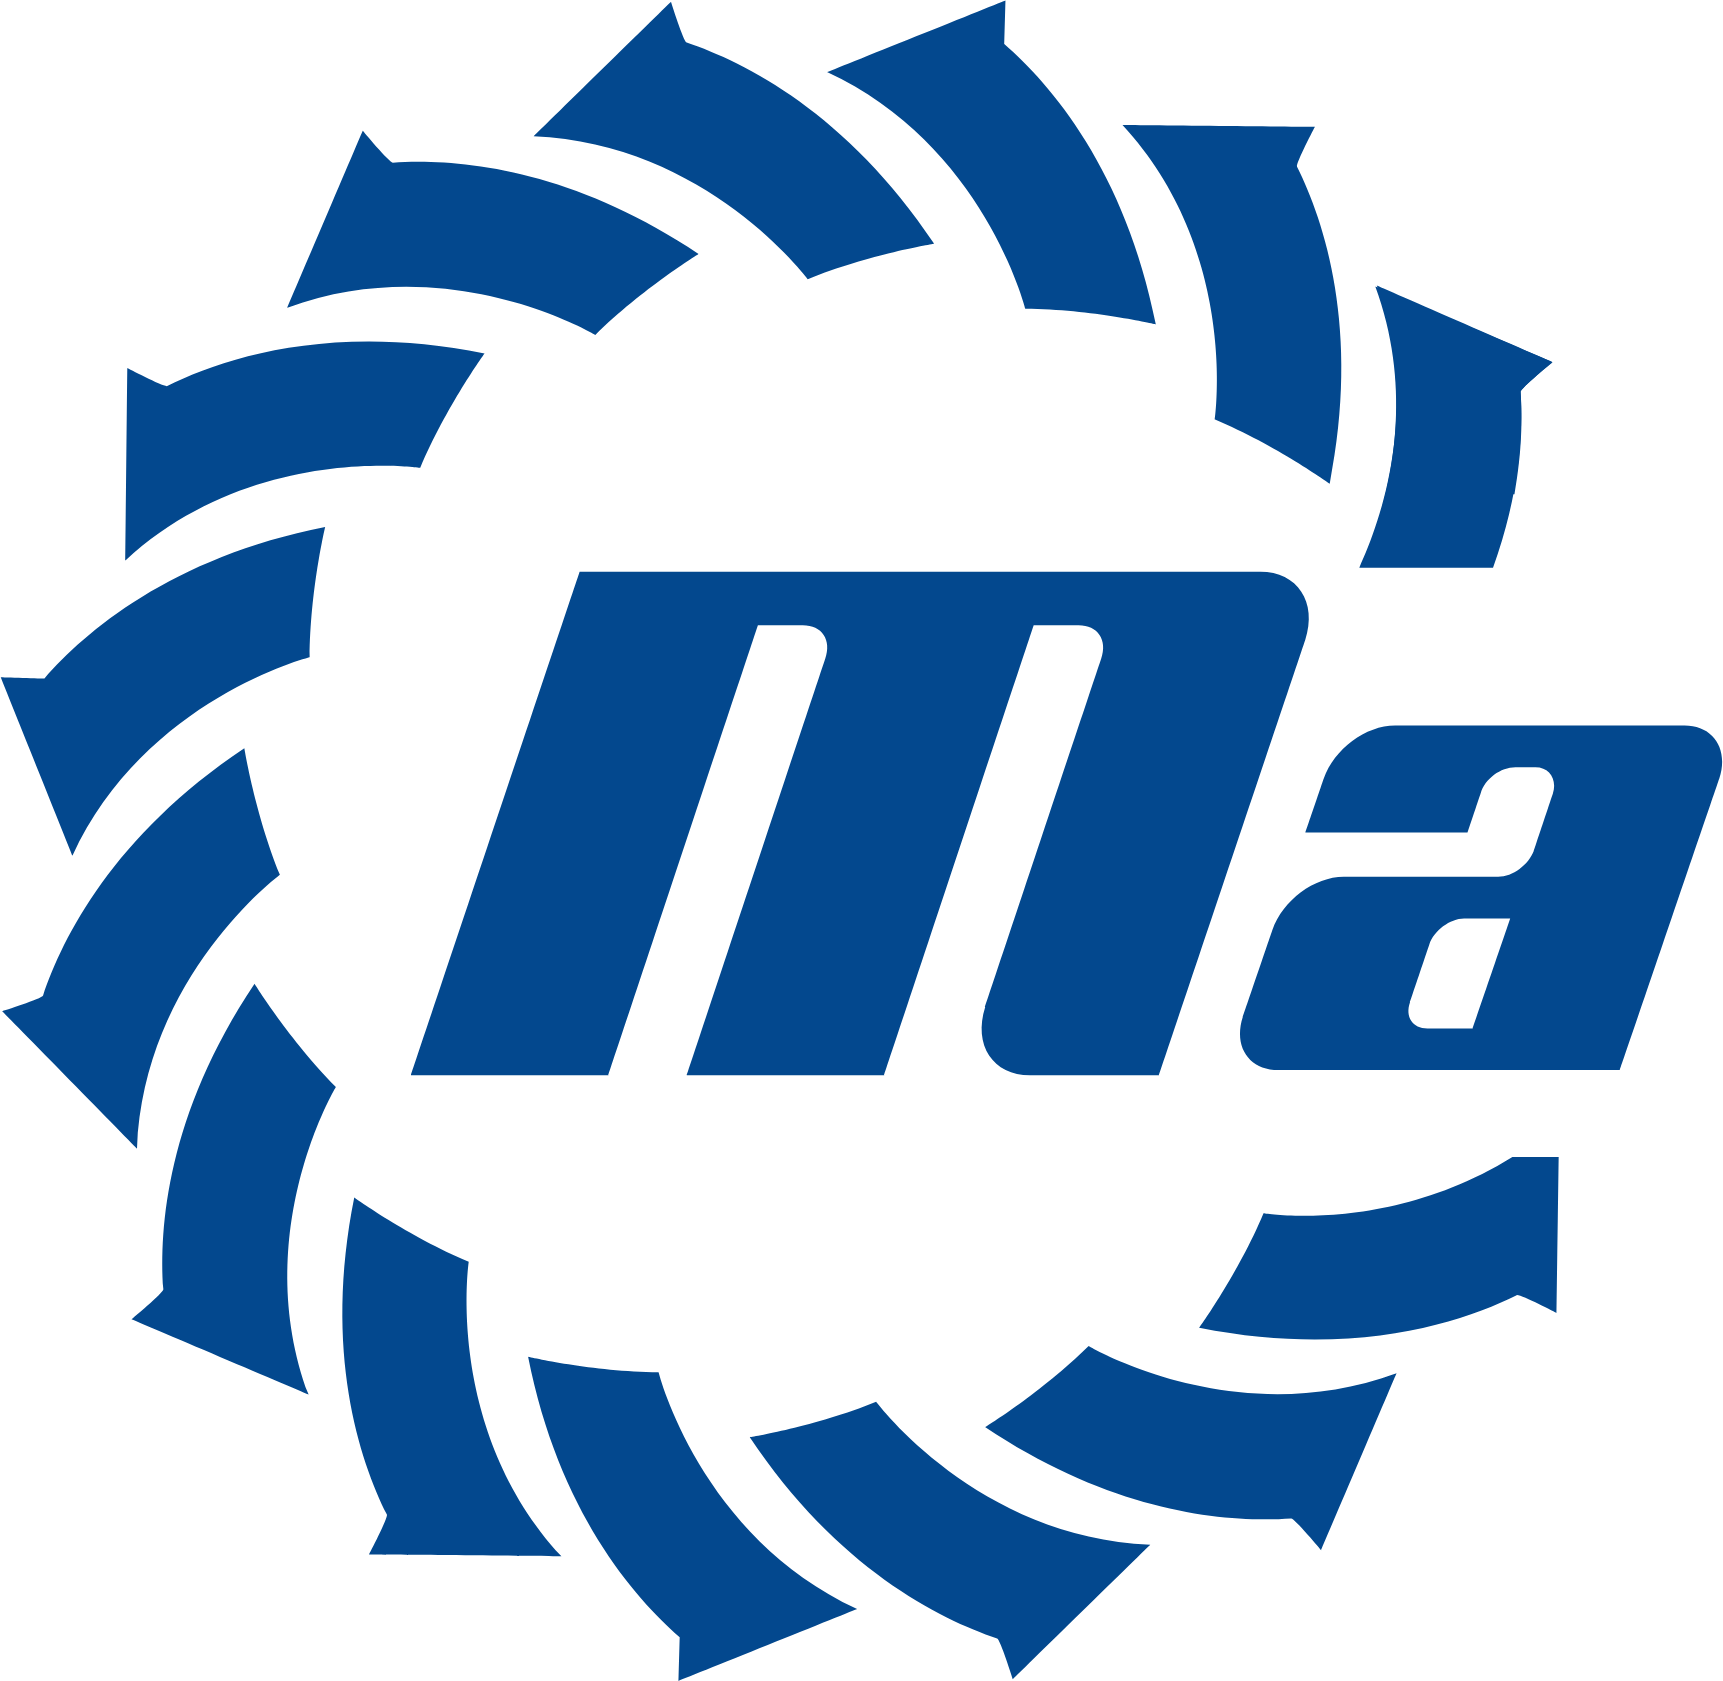 Matador Resources logo (transparent PNG)